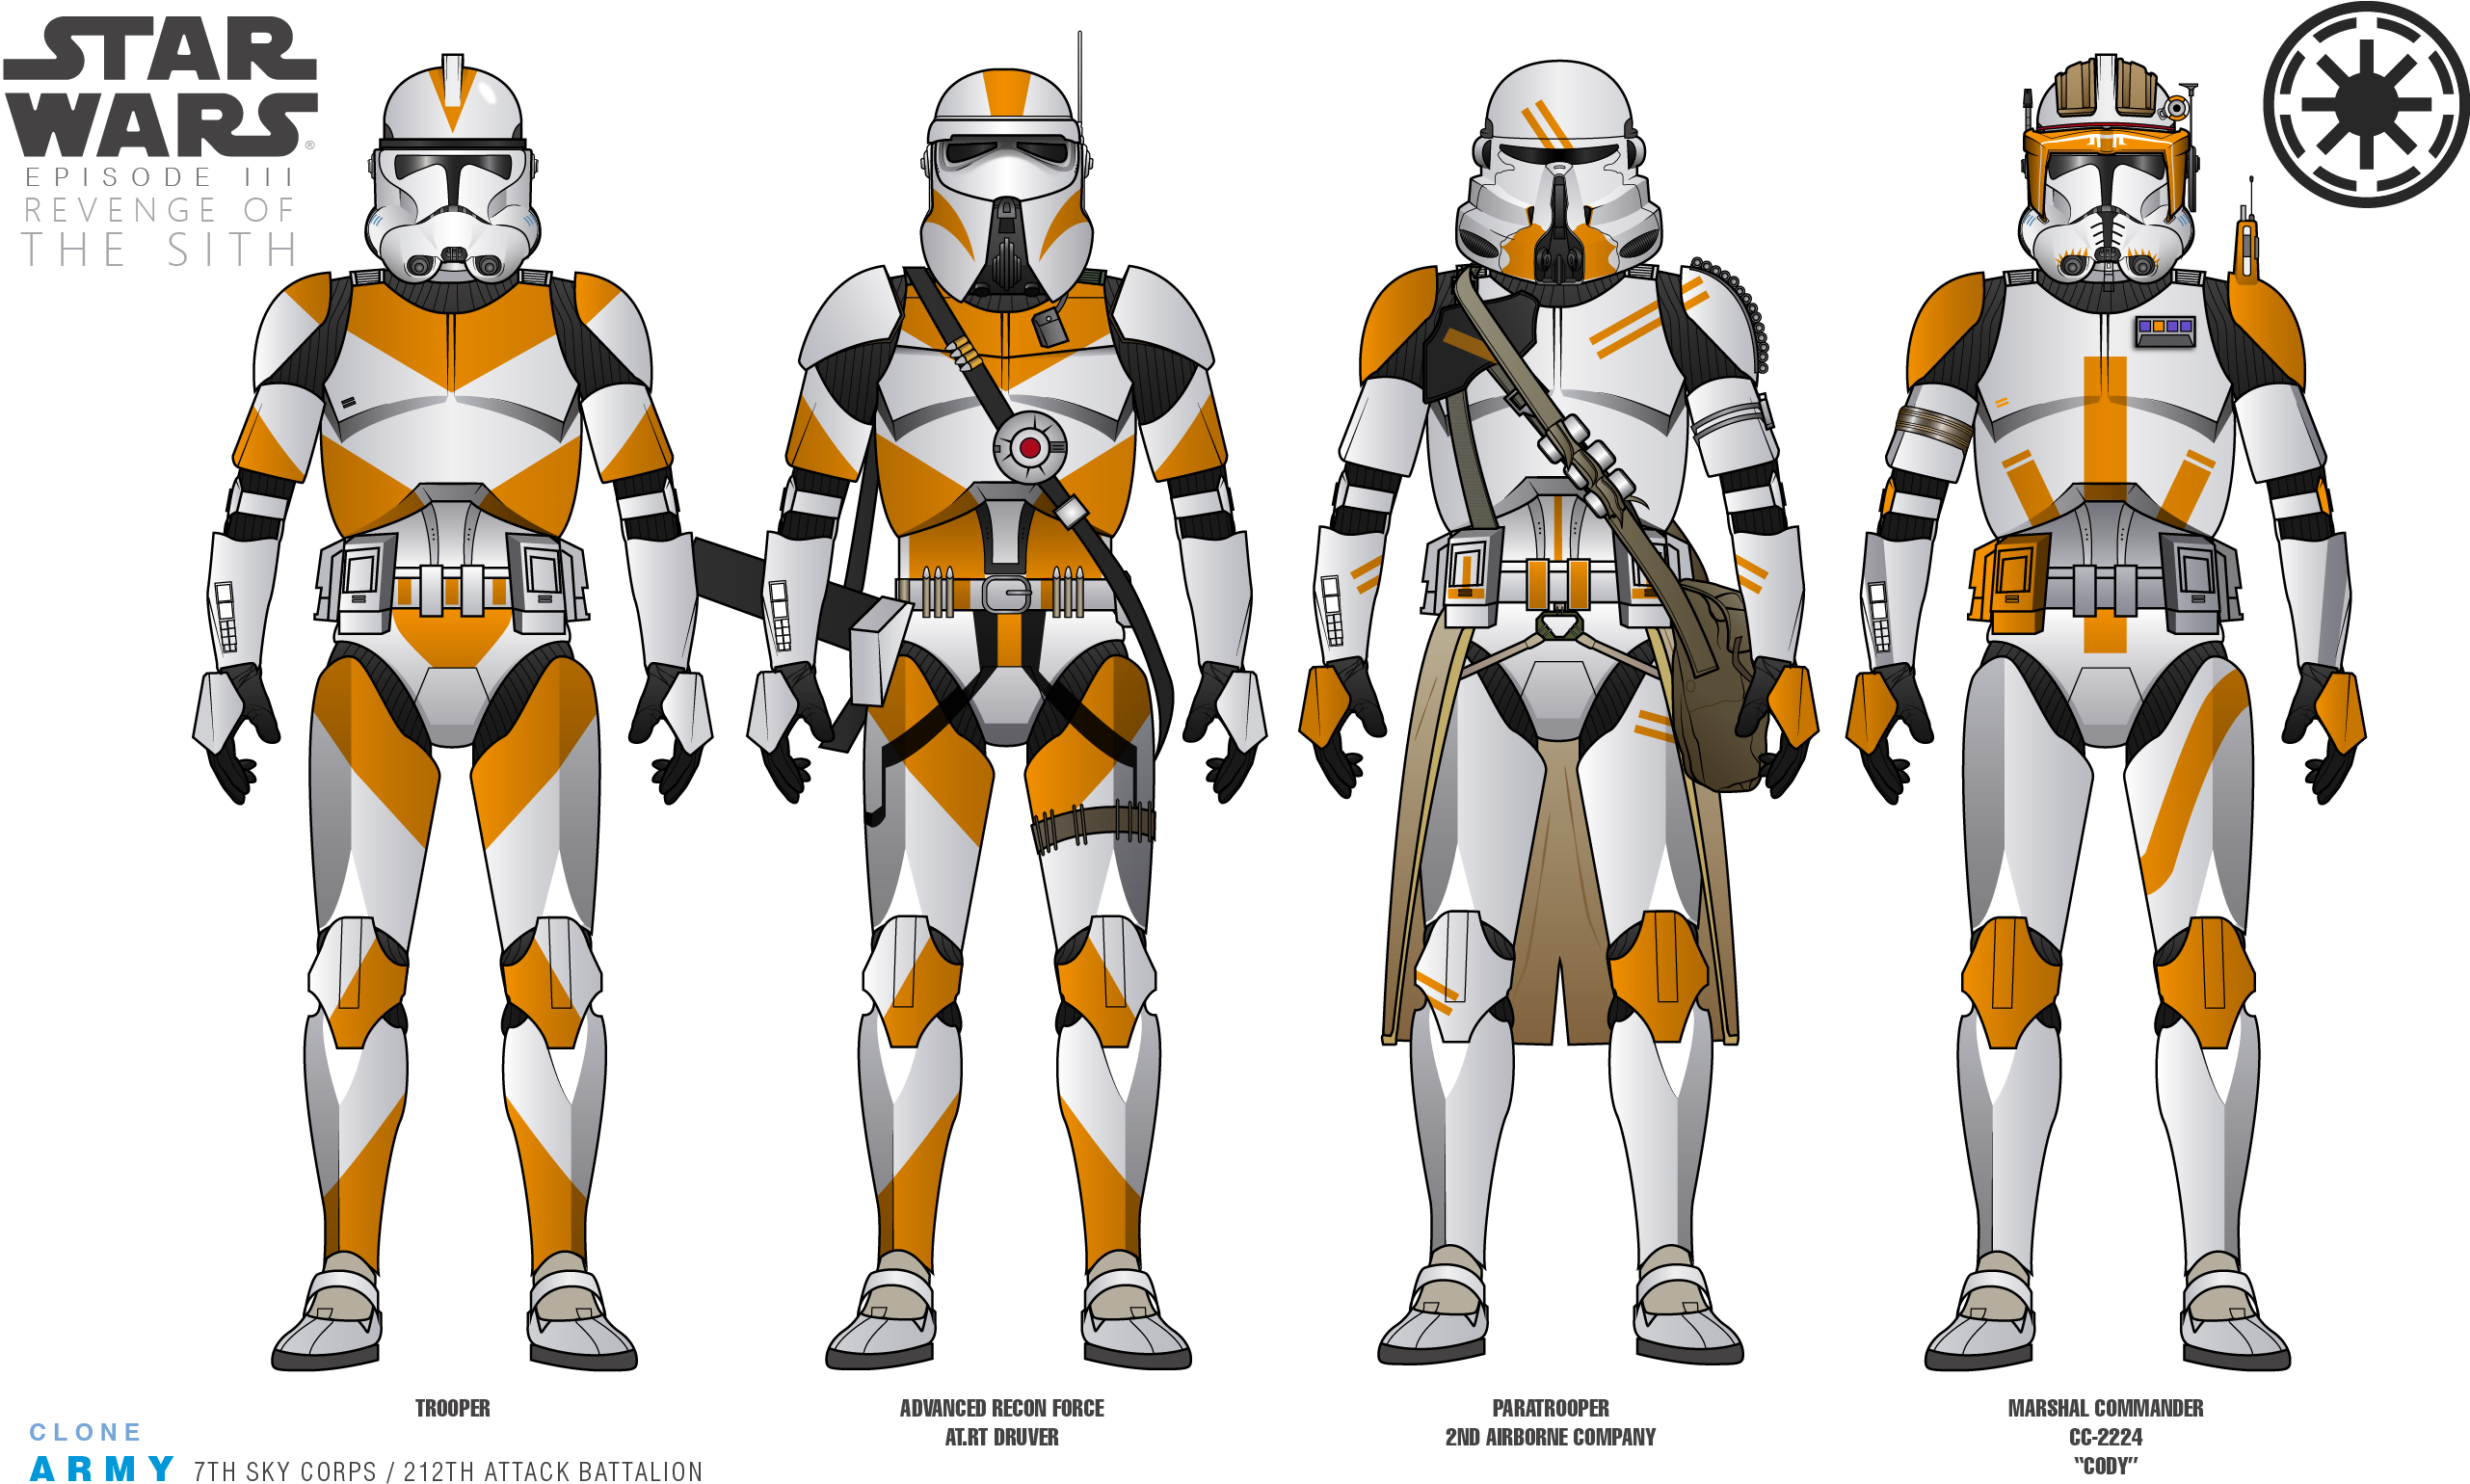 7th Sky Corps By Efrajoey1 Star Wars Baby, Clone Trooper, - Star Wars 7...